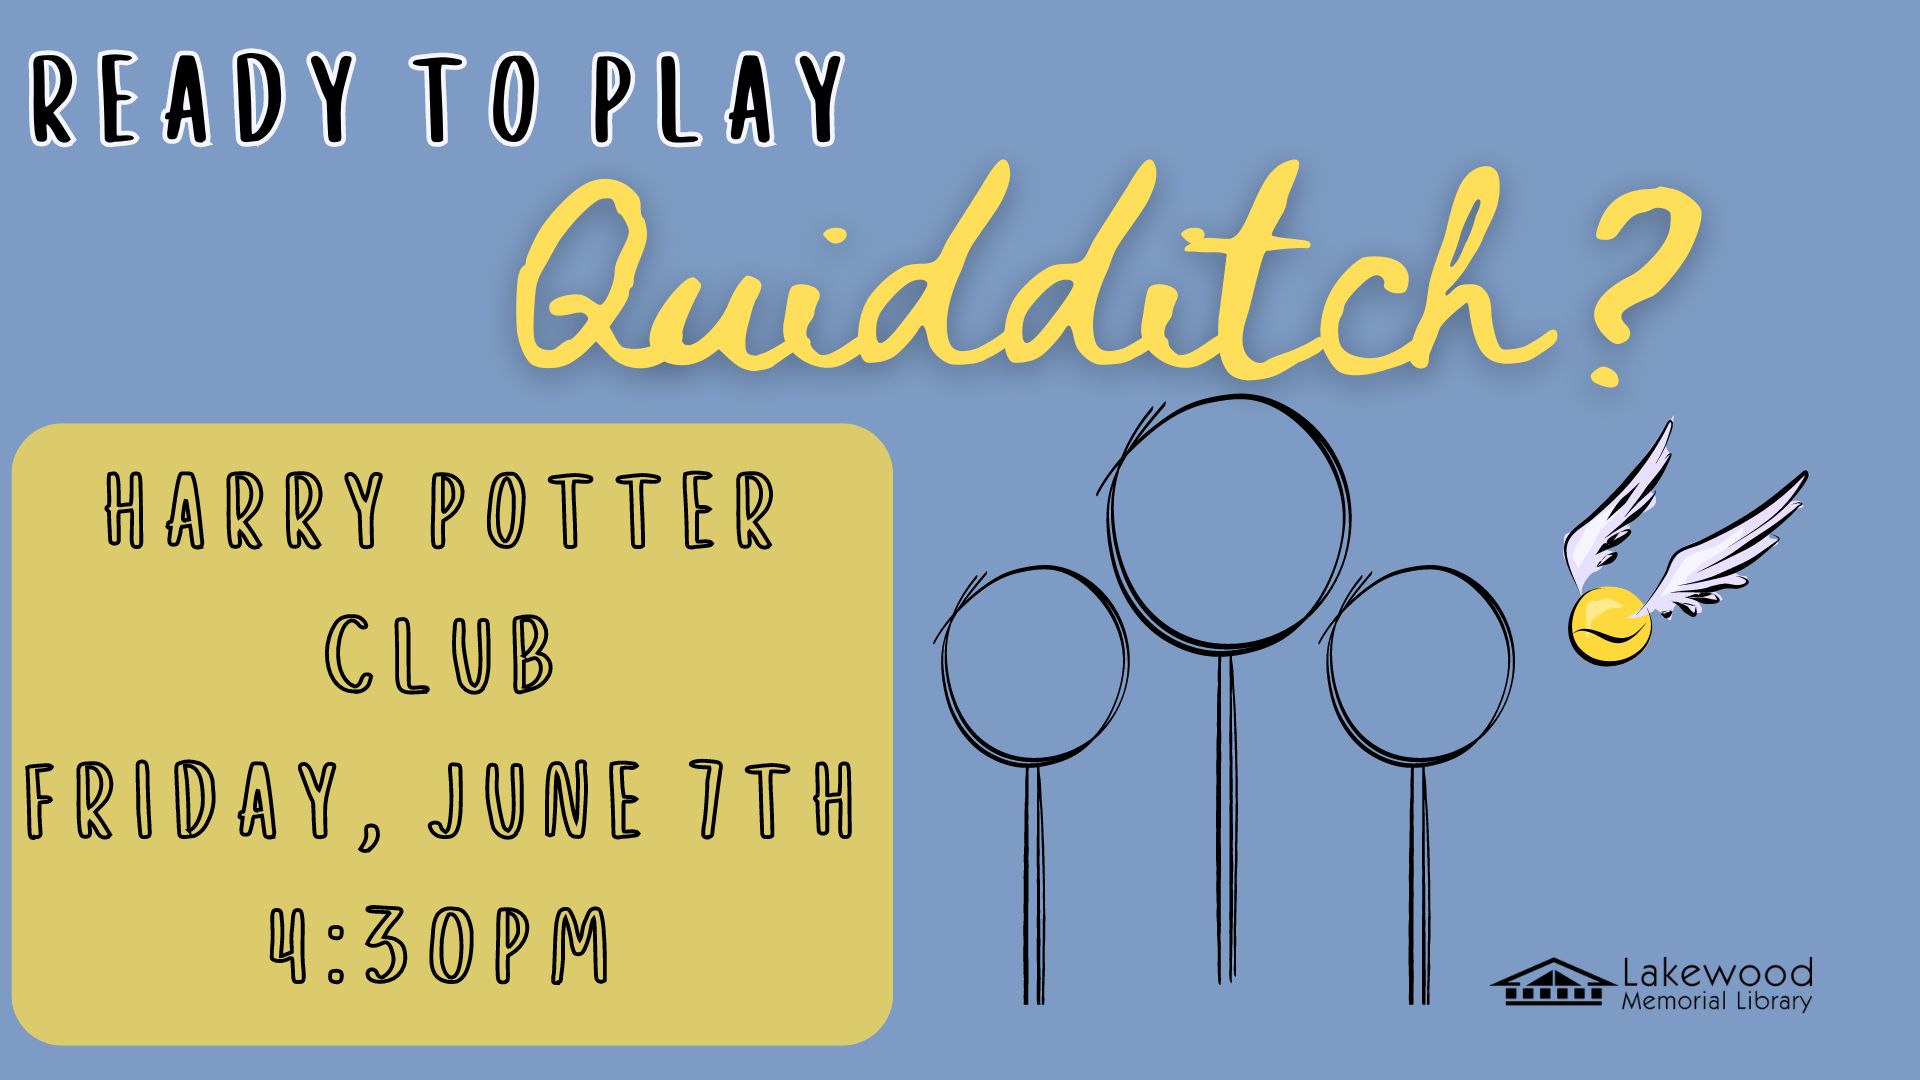 Harry Potter Club: Quidditch